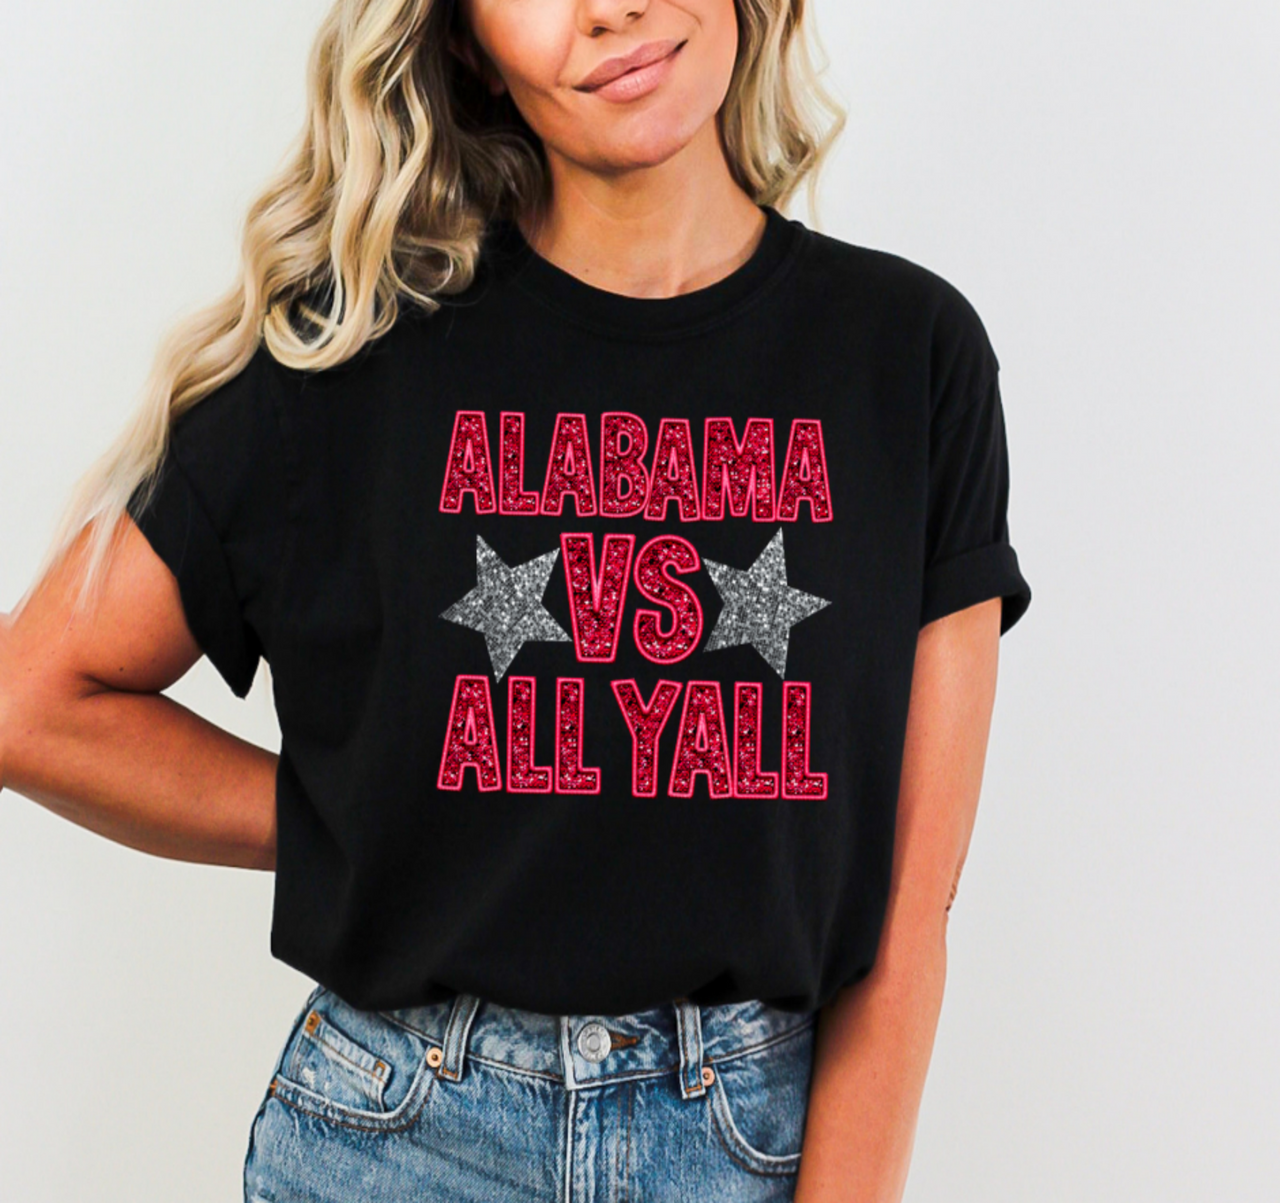 Alabama Vs All Yall Faux Glitter Tee